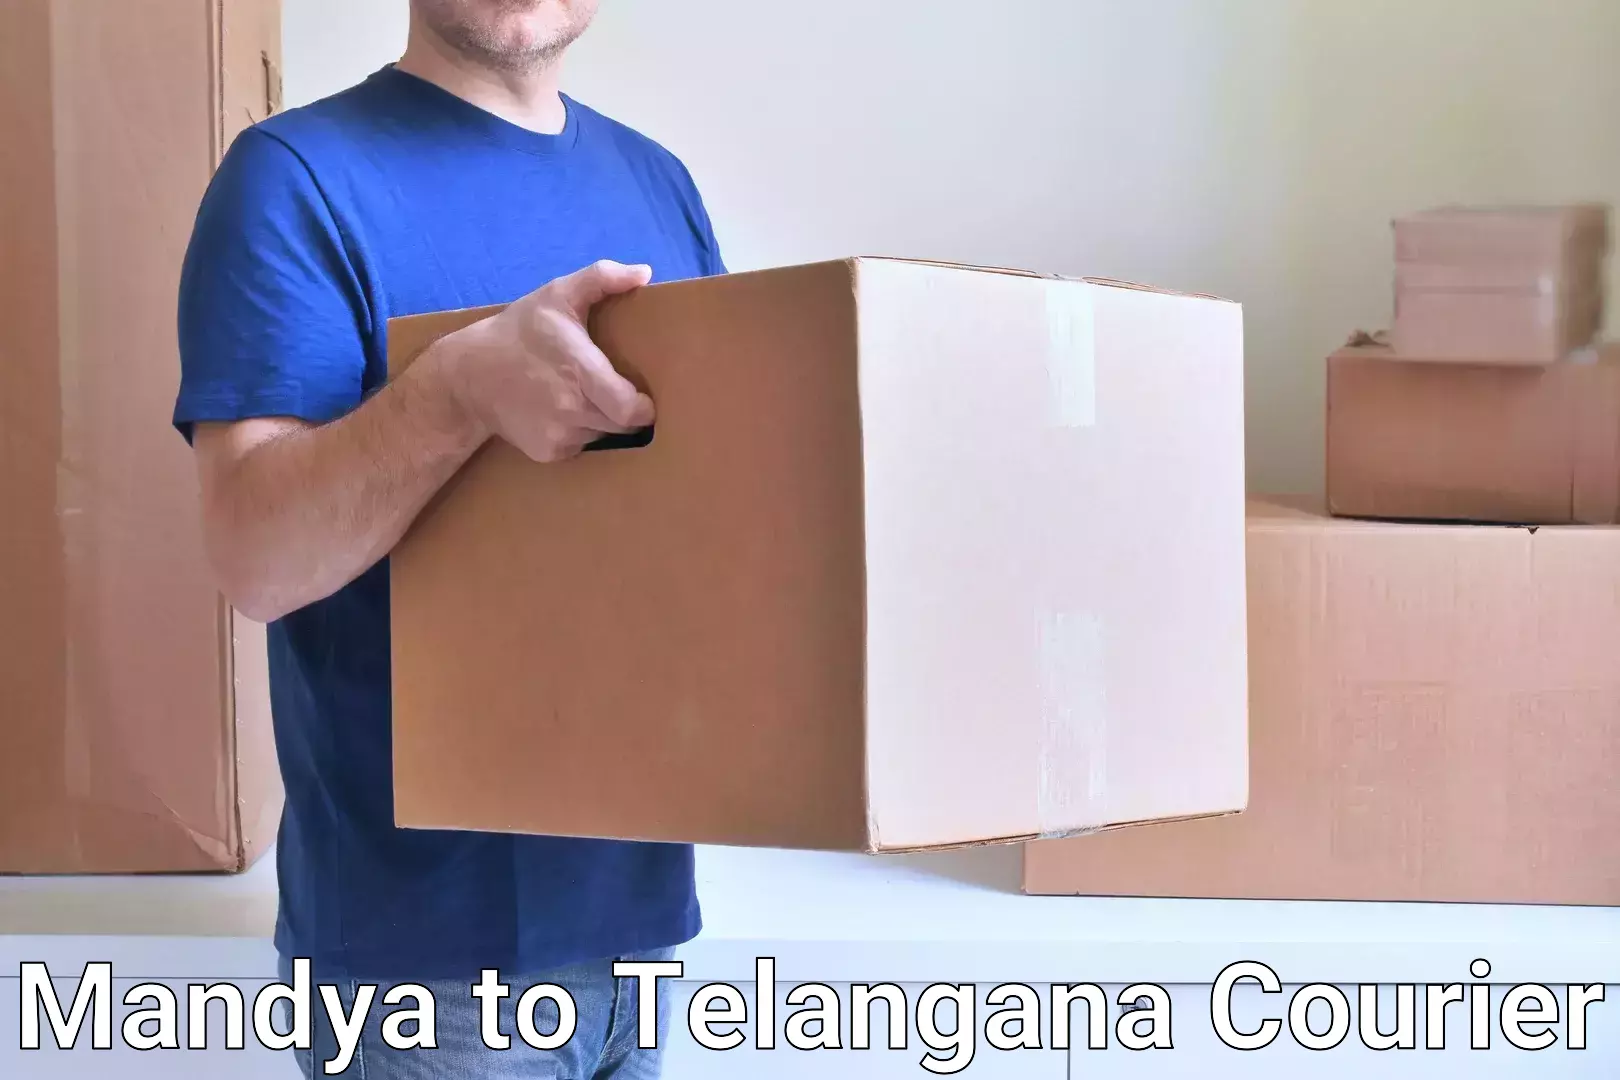 Logistics service provider Mandya to Telangana